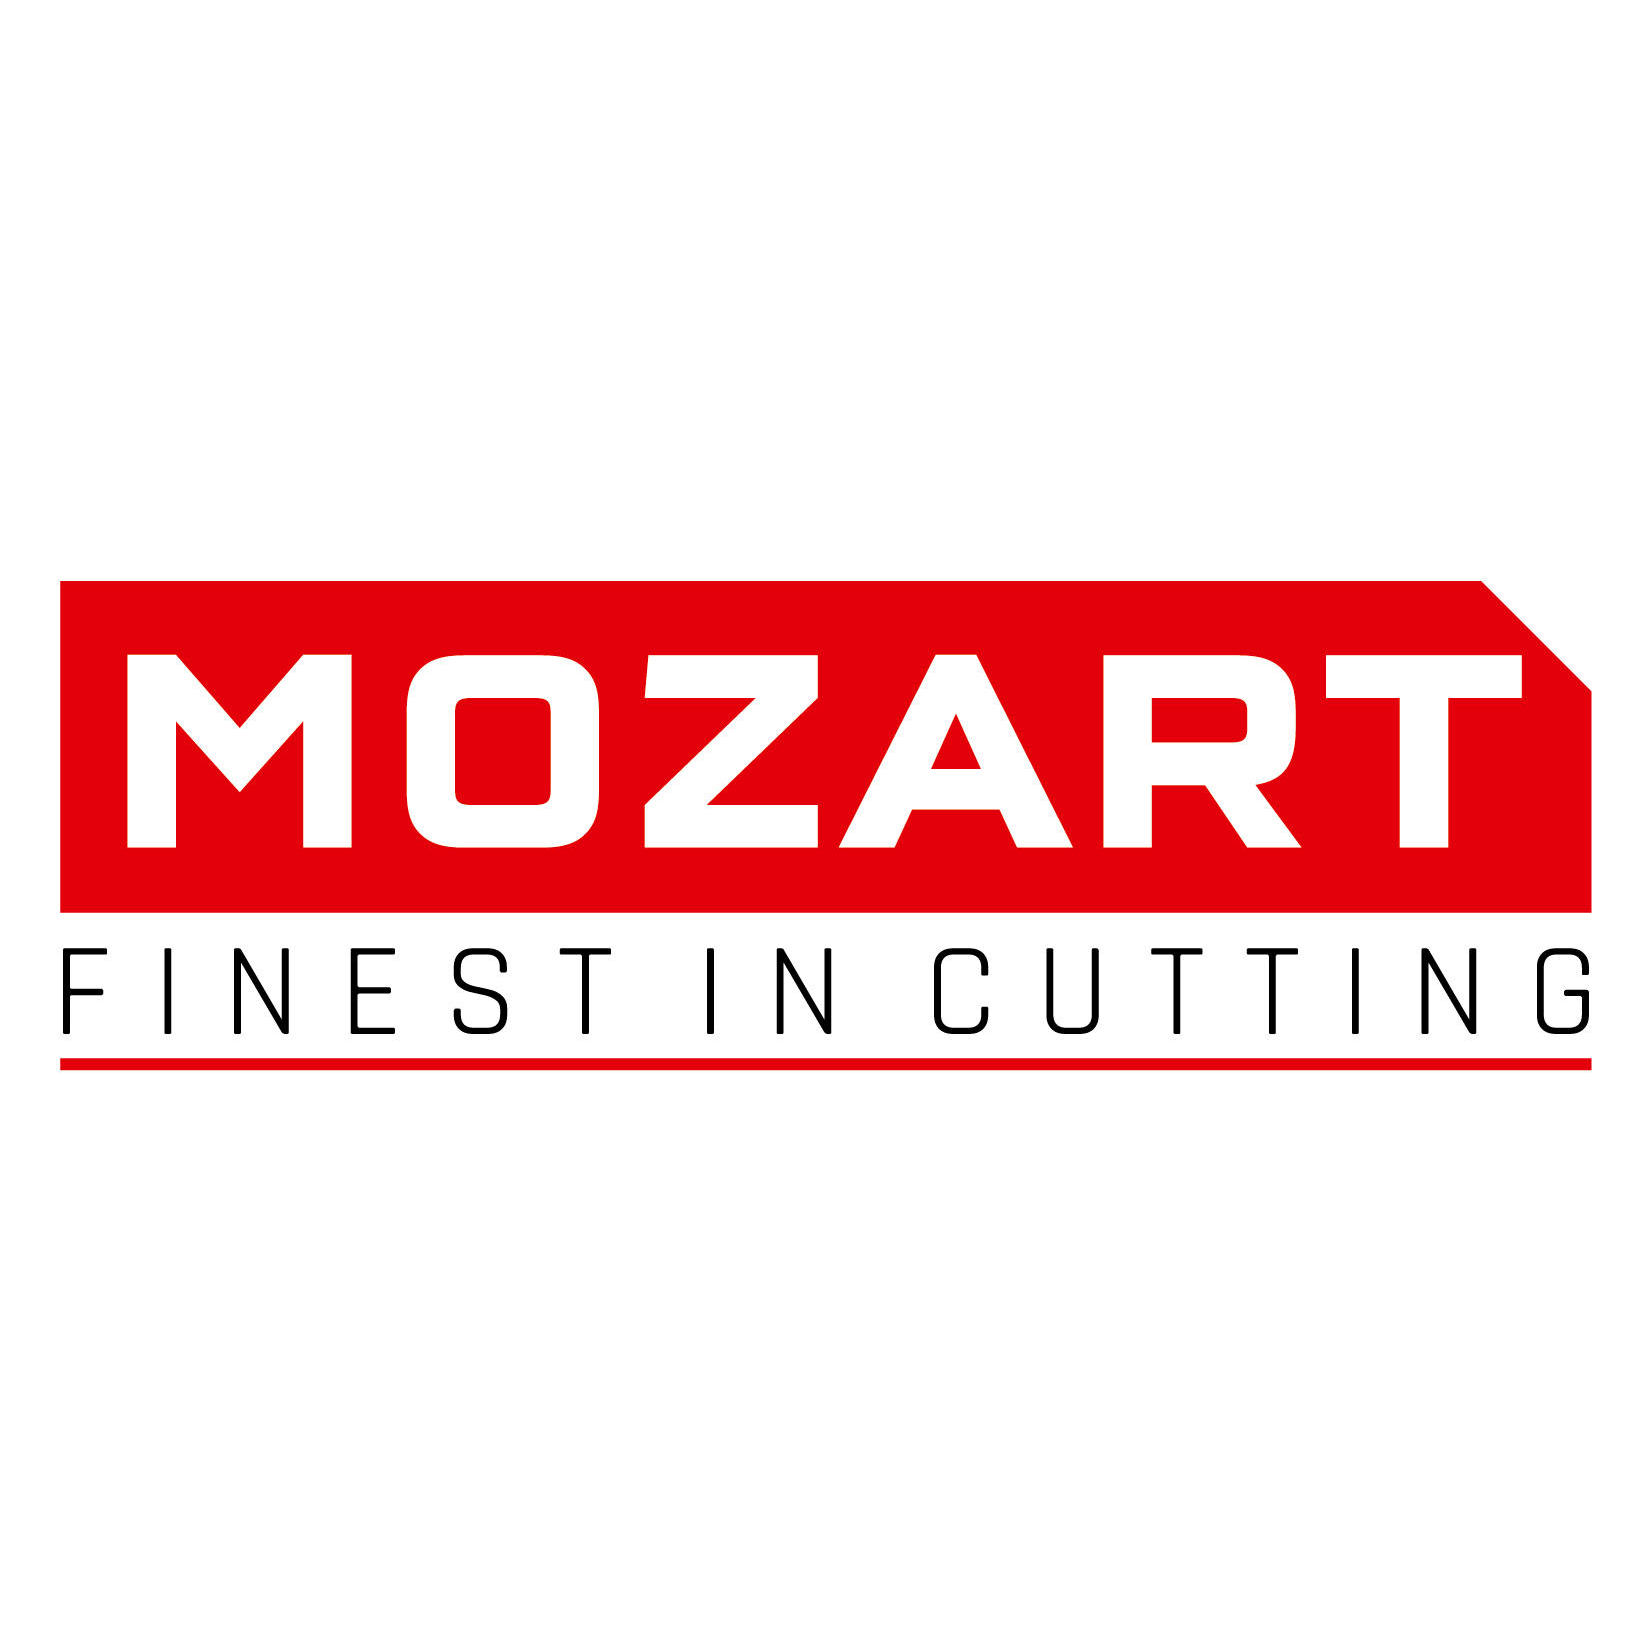 Logo MOZART AG